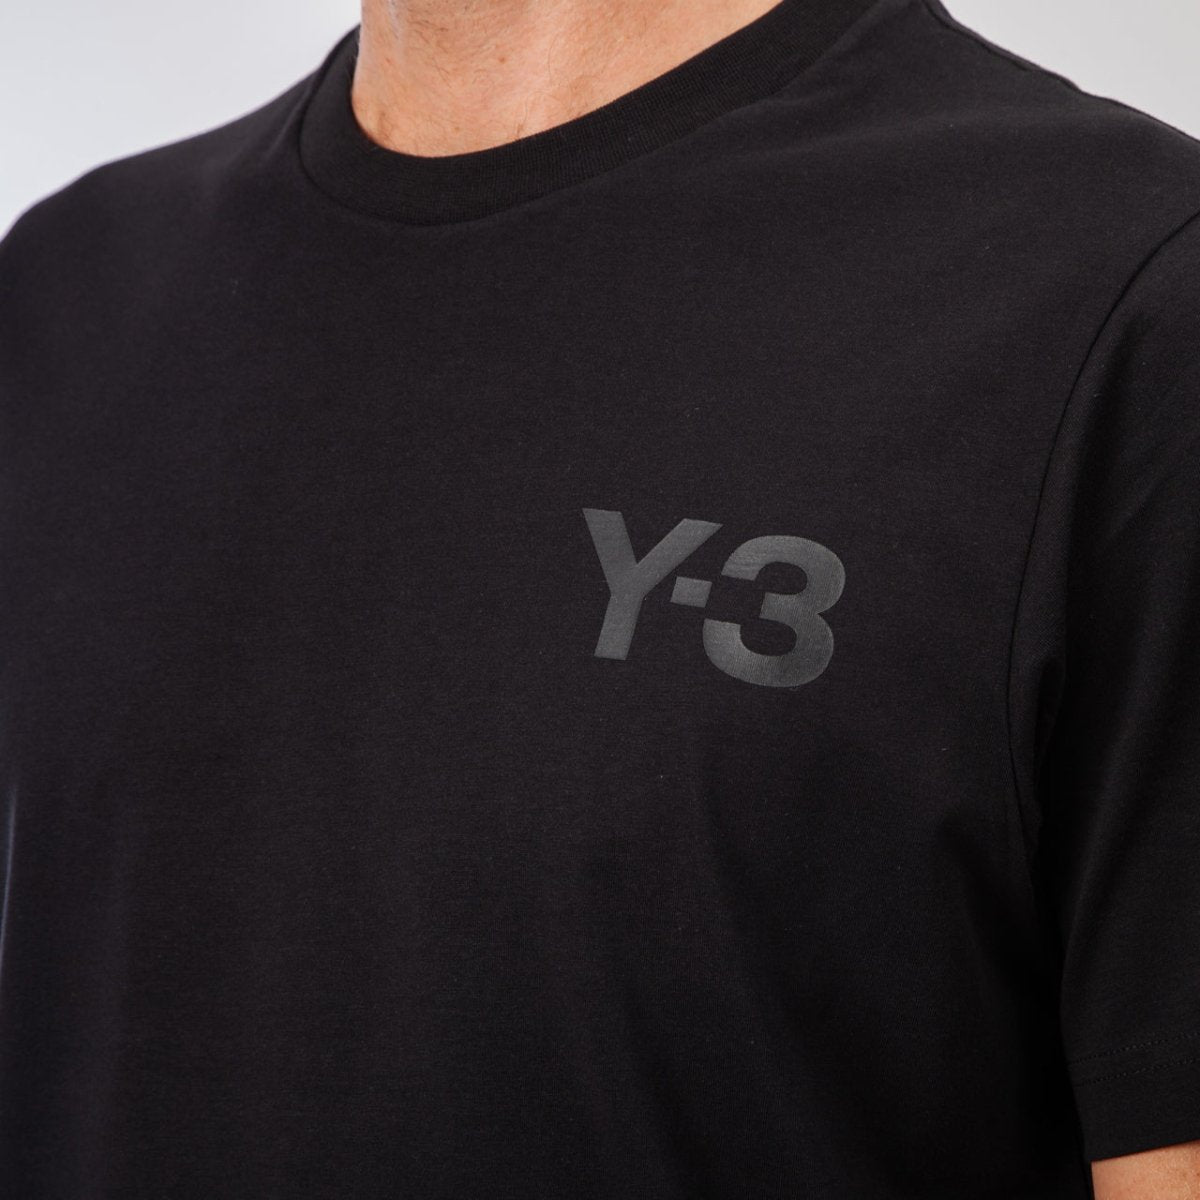 Y-3 Classic T-Shirt (Schwarz)  - Allike Store